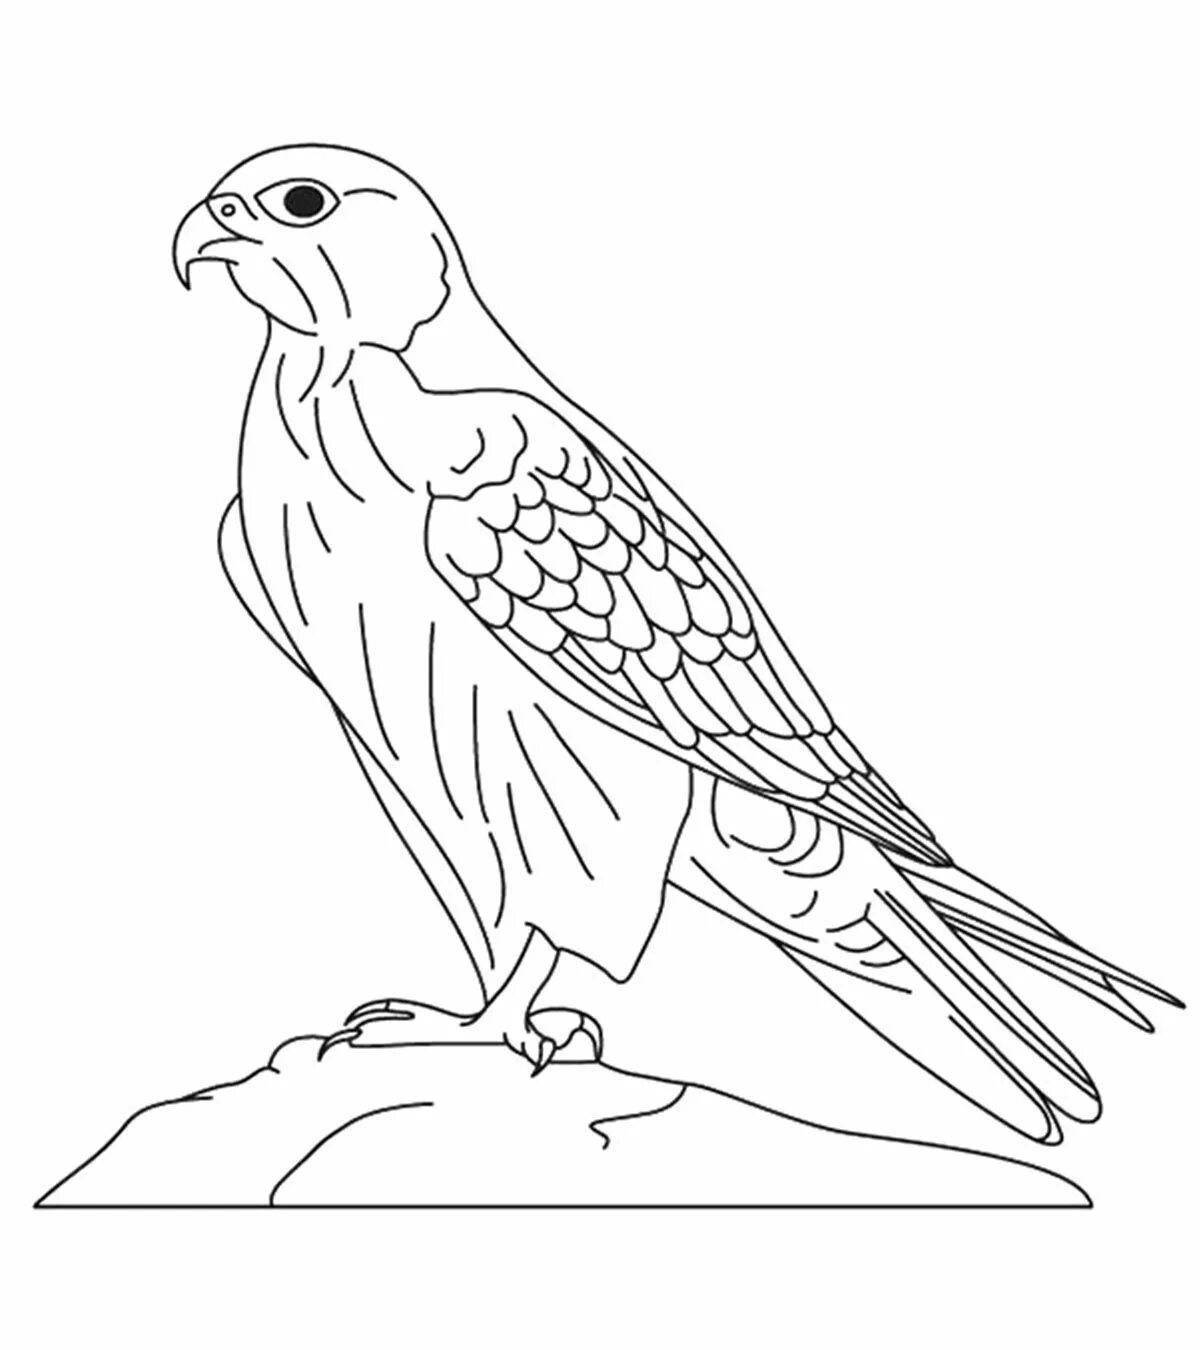 Coloring page friendly peregrine falcon